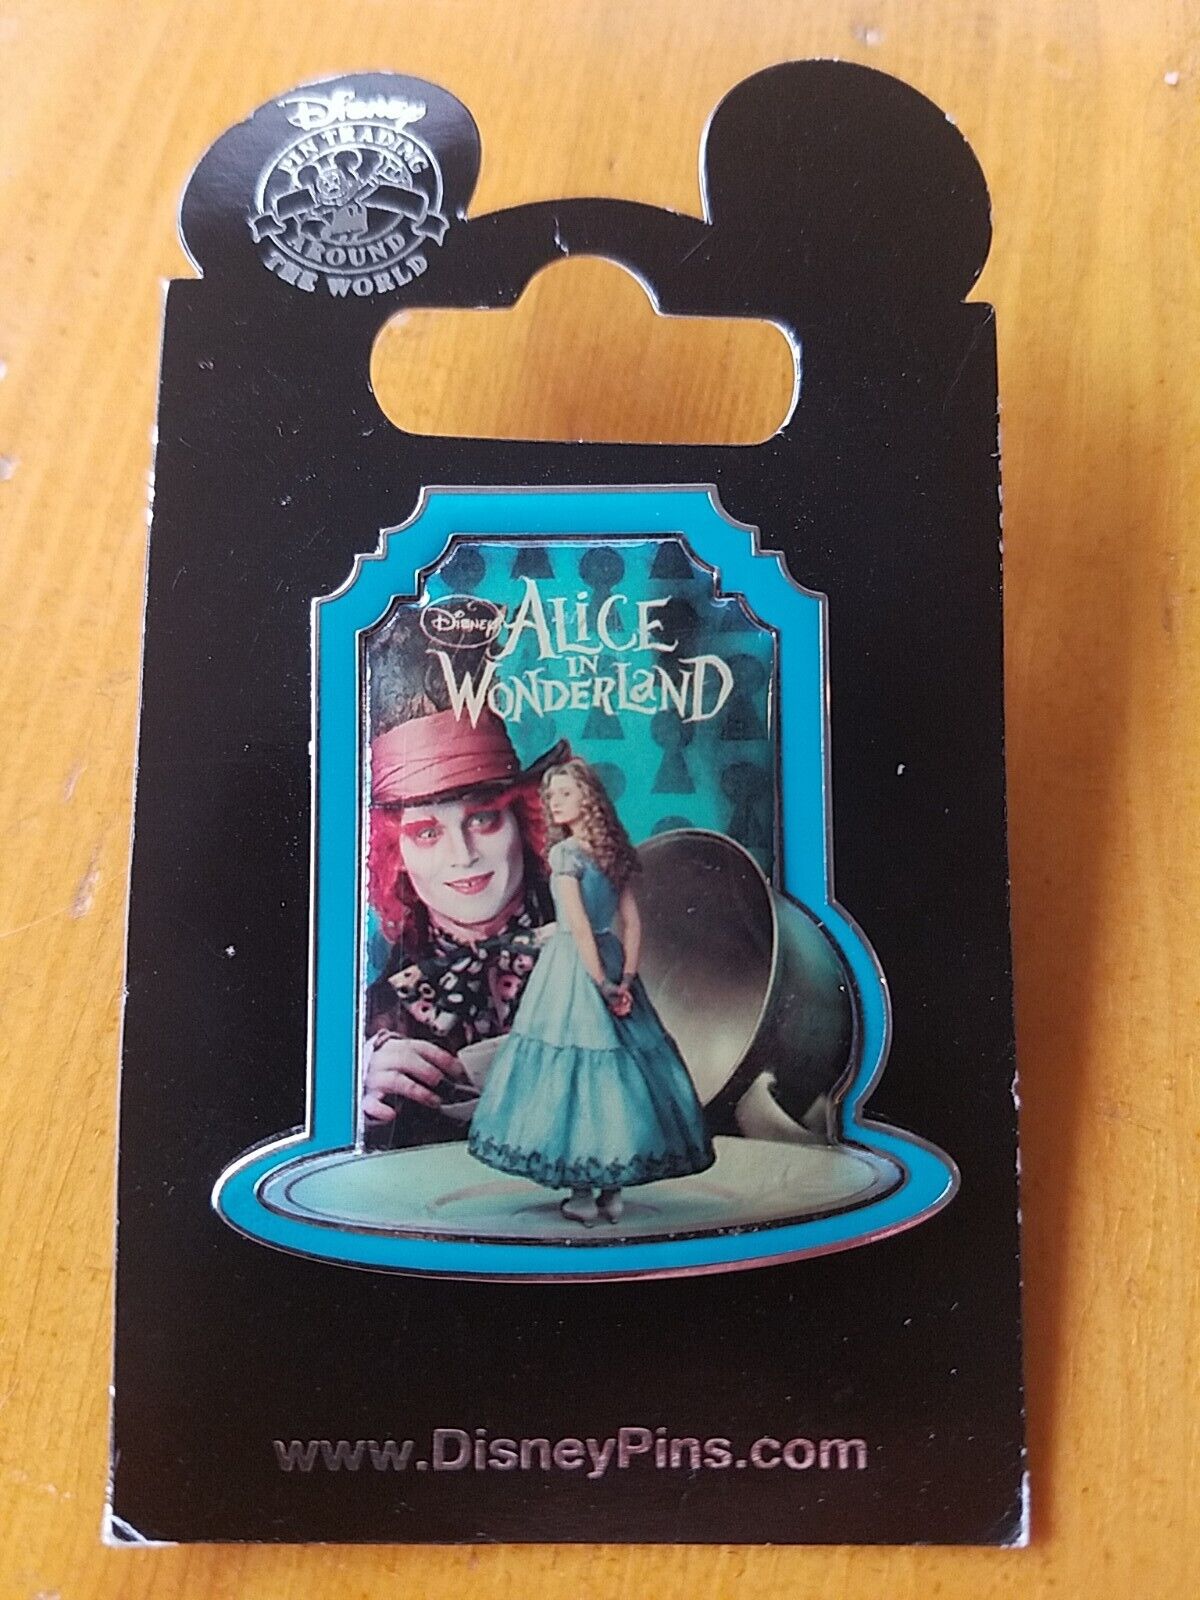 Disney Pin 75265 Alice in Wonderland Mad Hatter Johnny Depp Tim Burton film